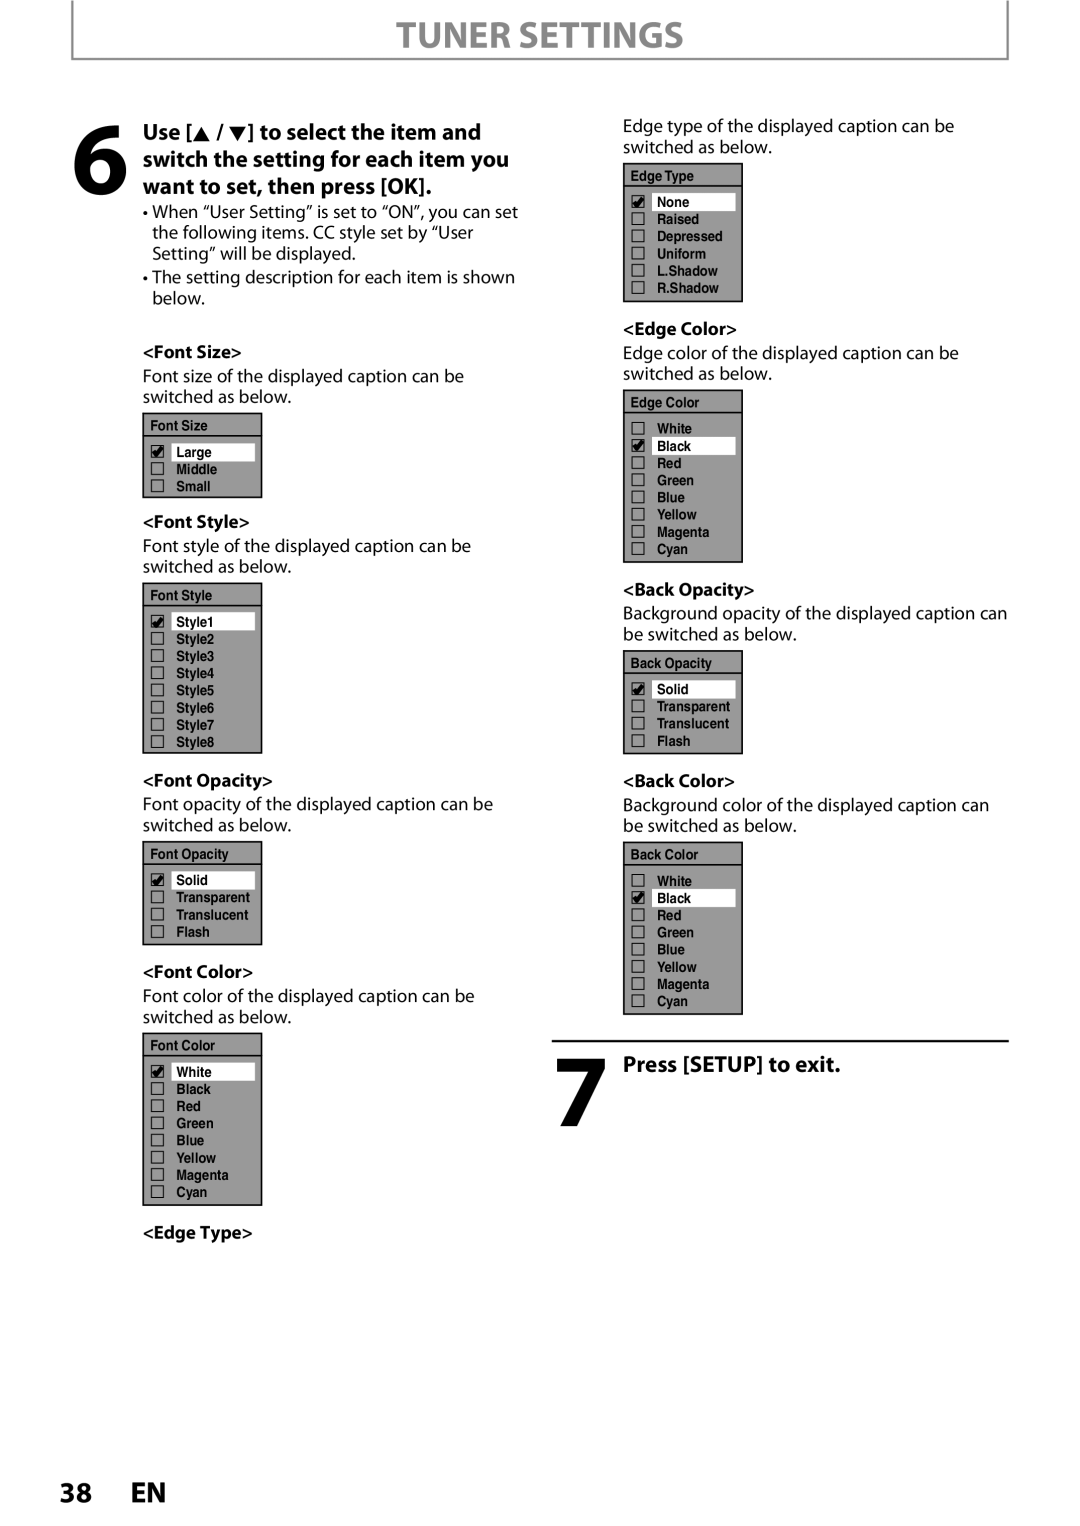 Magnavox 1VMN26713A Font Size, Font Style, Edge Color, Back Opacity, Font Opacity, Font Color, Back Color, Edge Type 